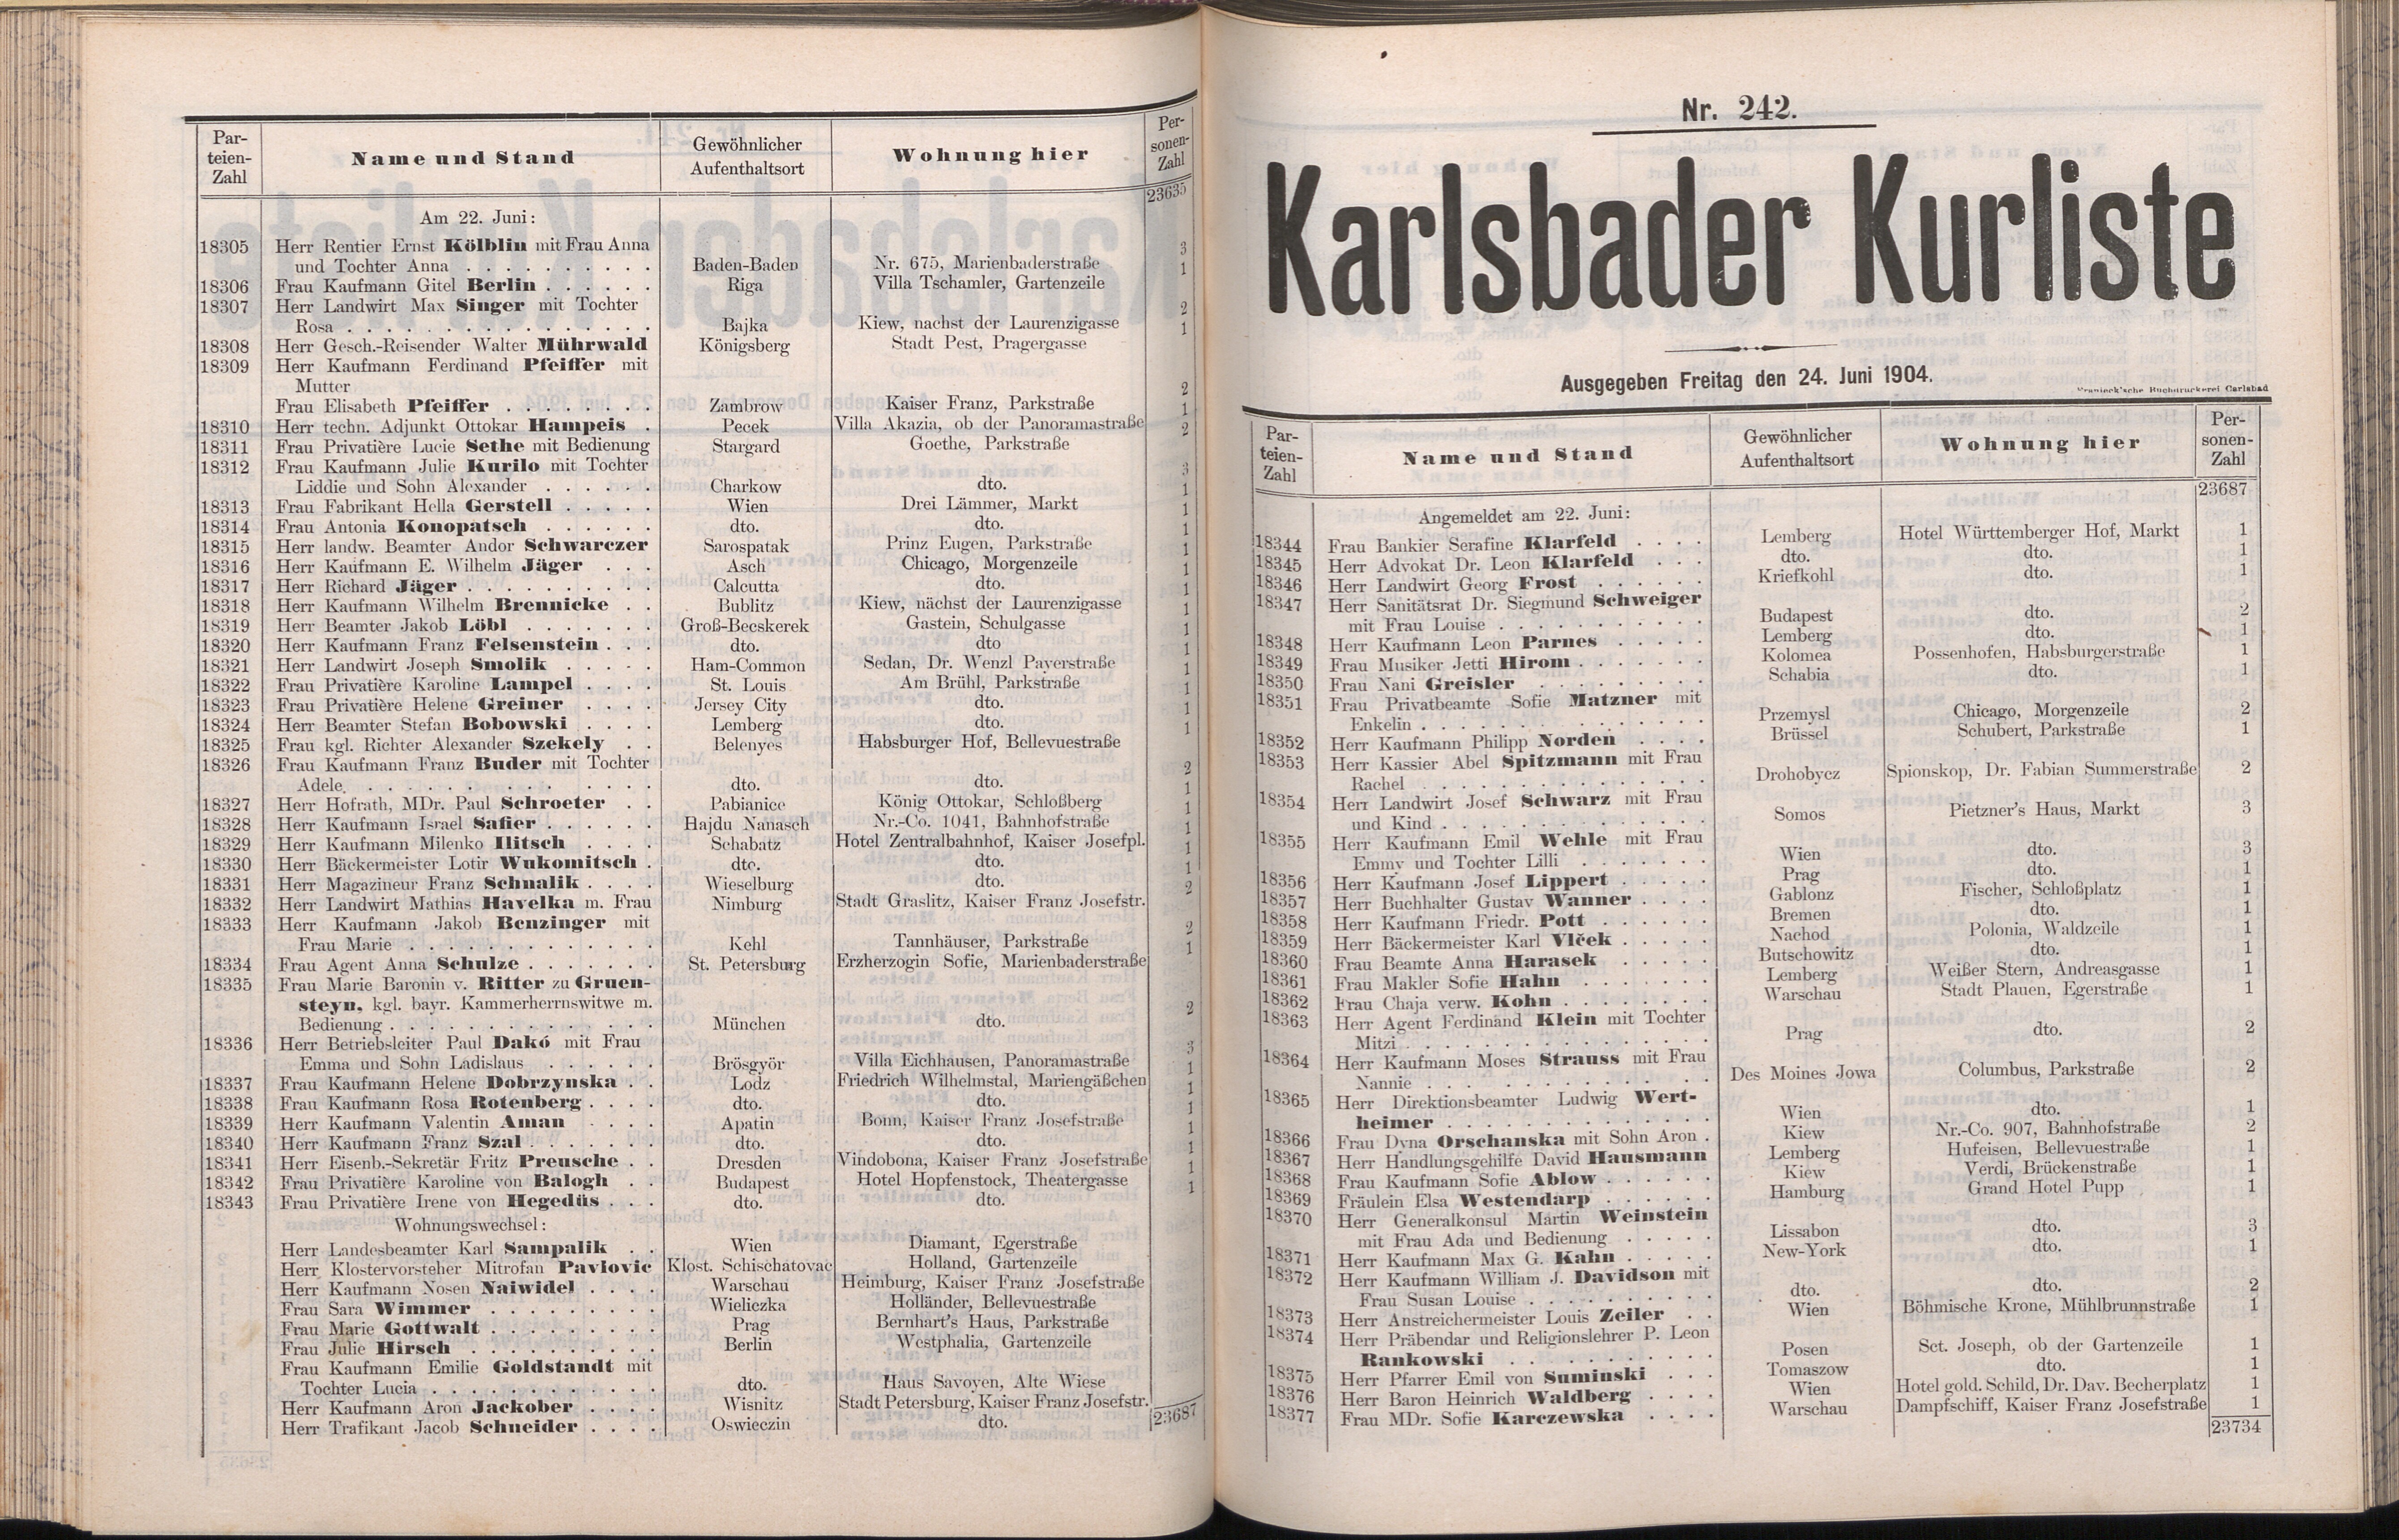 264. soap-kv_knihovna_karlsbader-kurliste-1904_2650